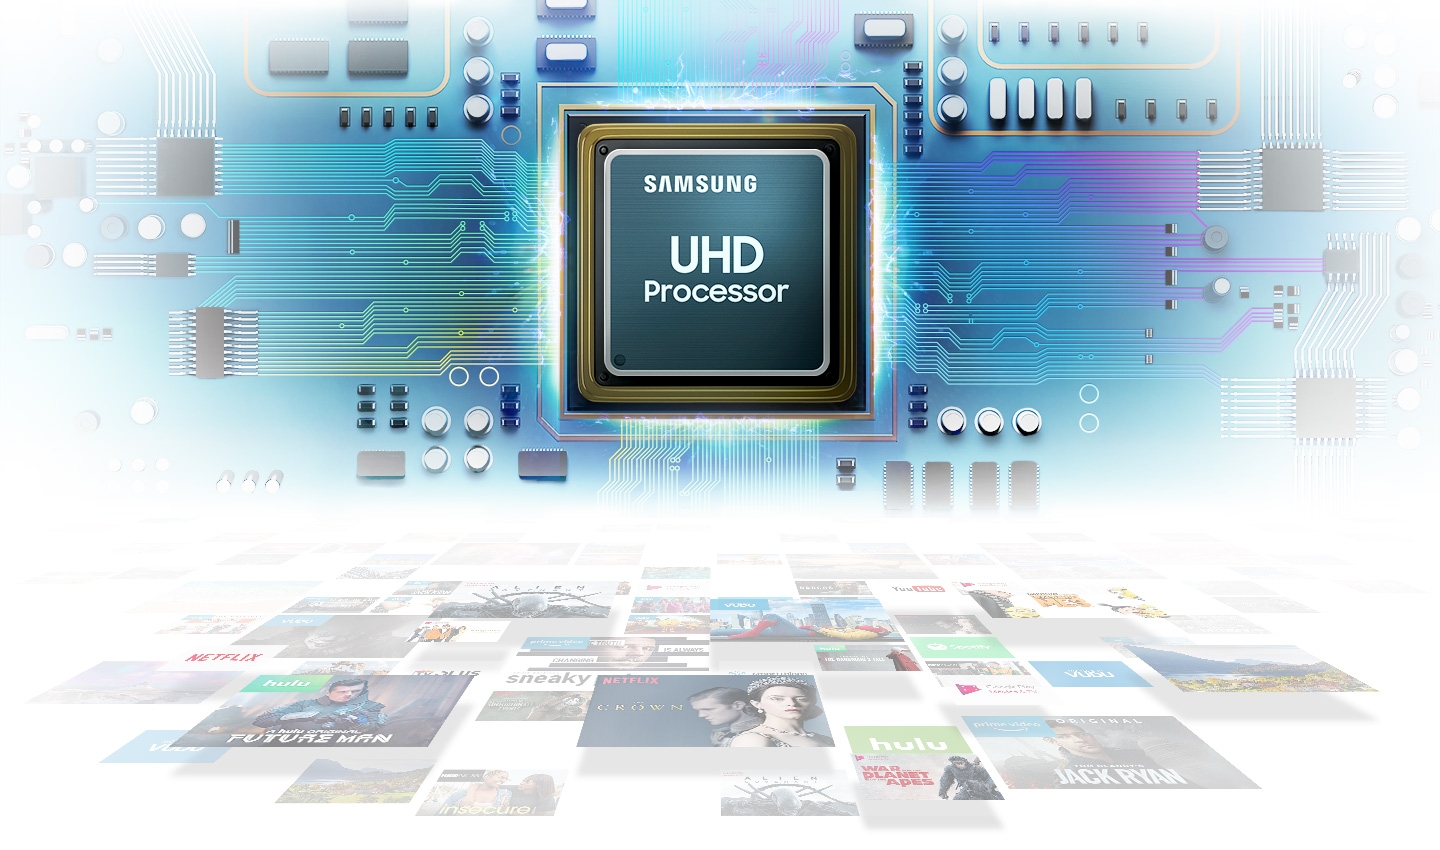 Samsung Smart TV with UHD processor